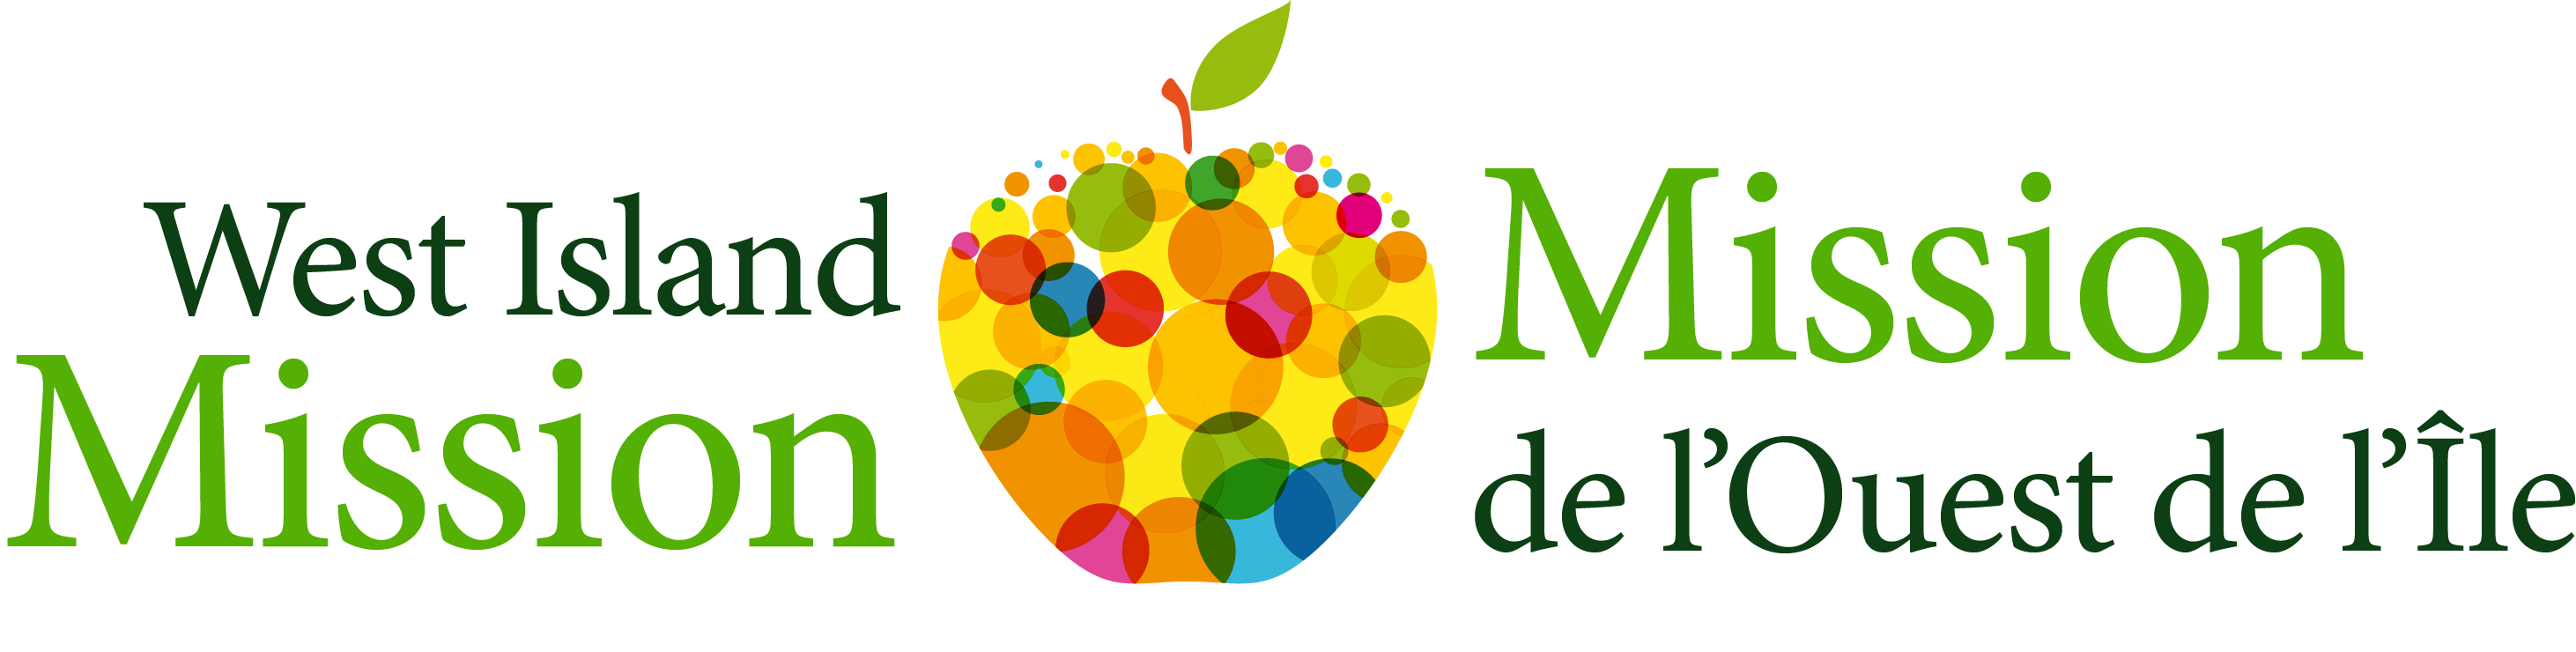 West island mission apple logo